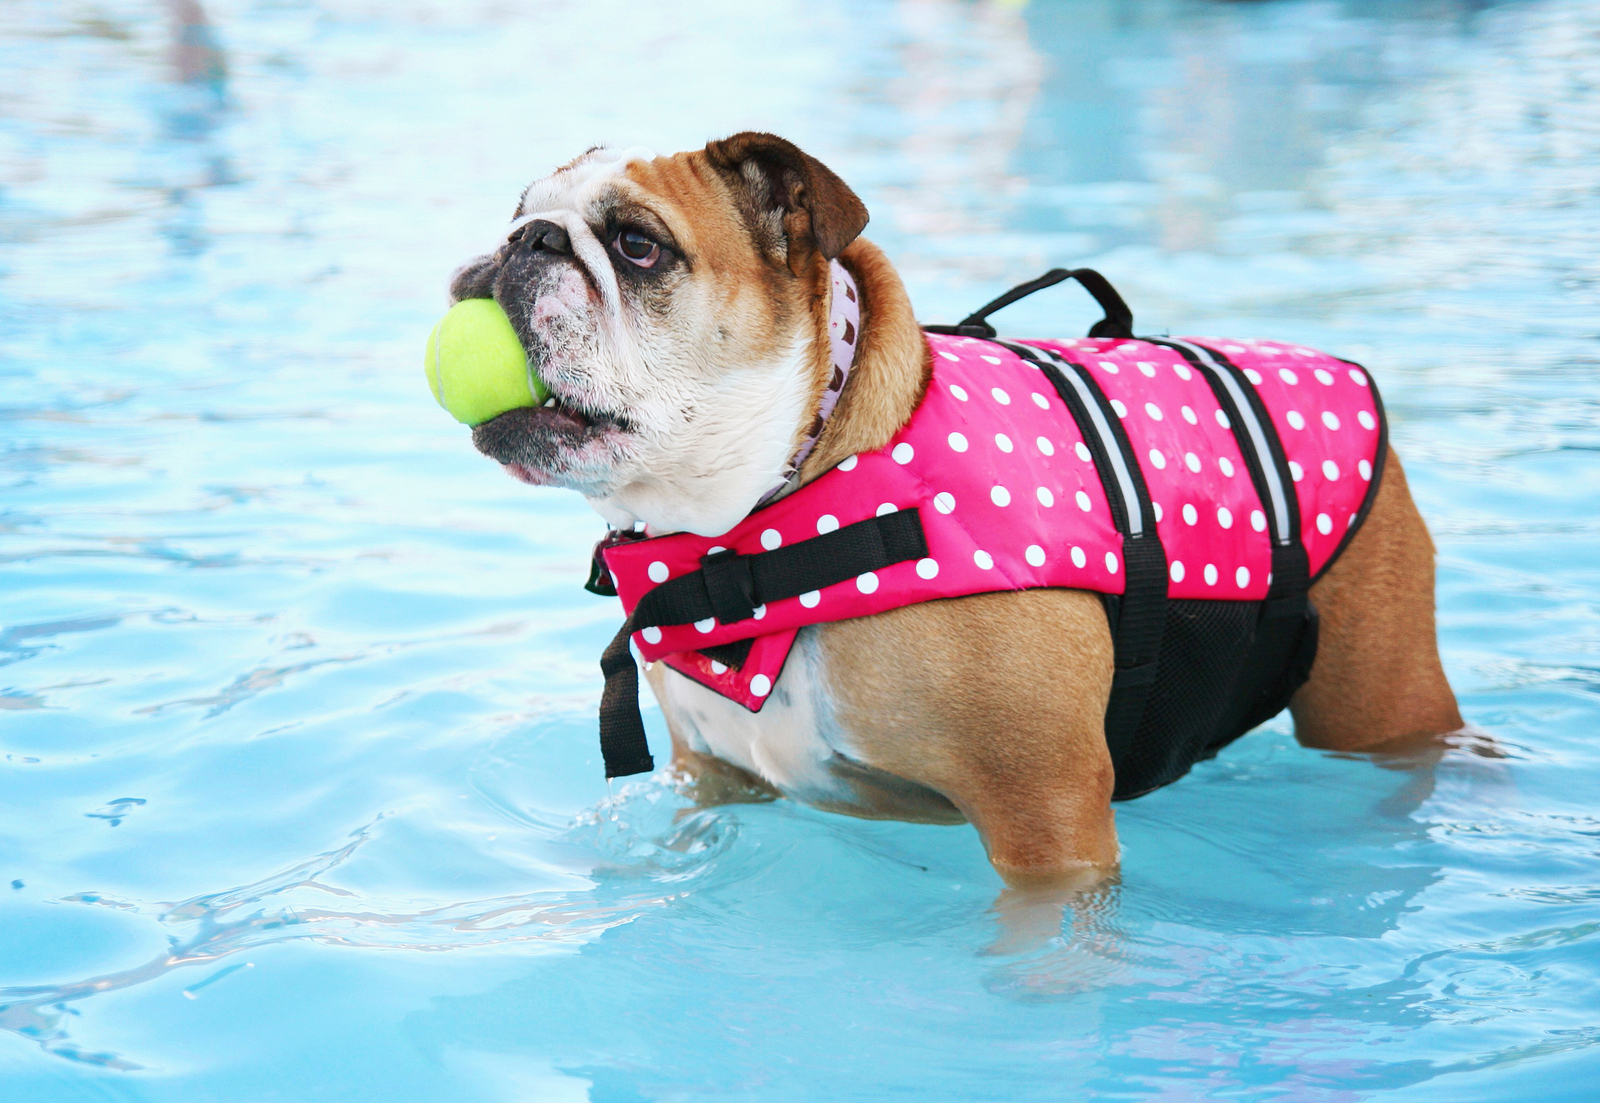 a dog having fun at a local public pool